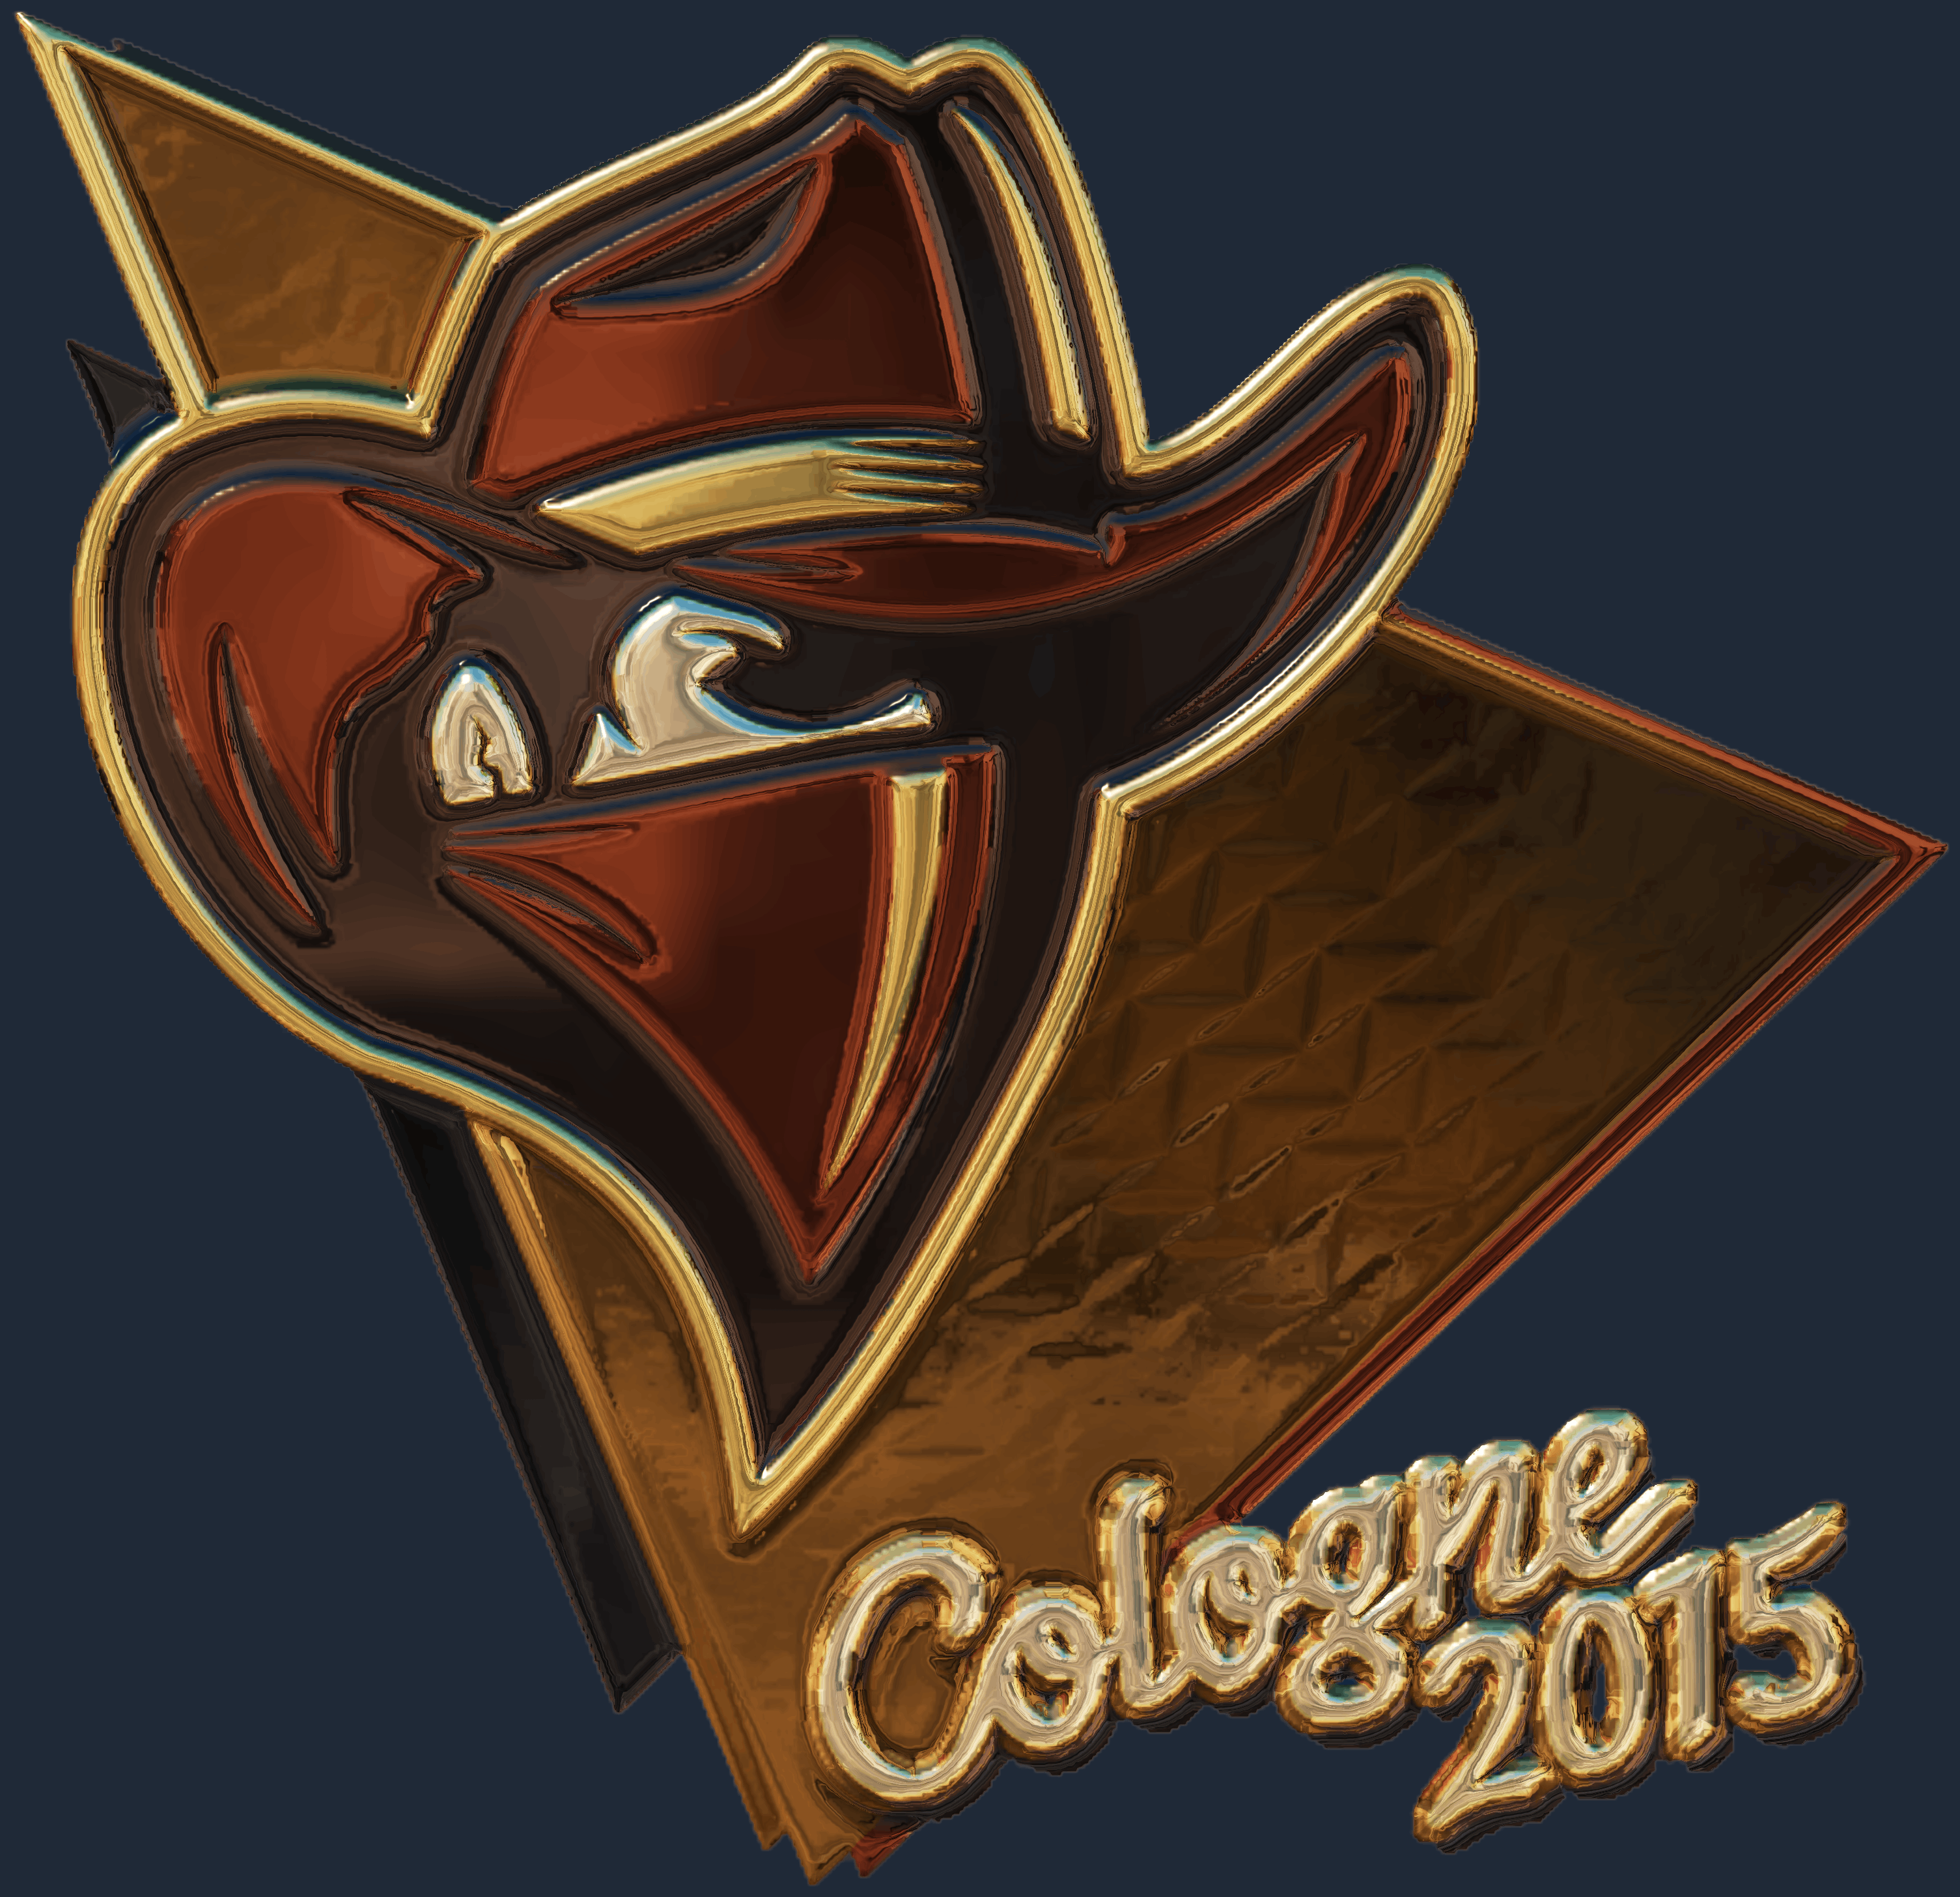 Sticker | Renegades (Gold) | Cologne 2015 Screenshot